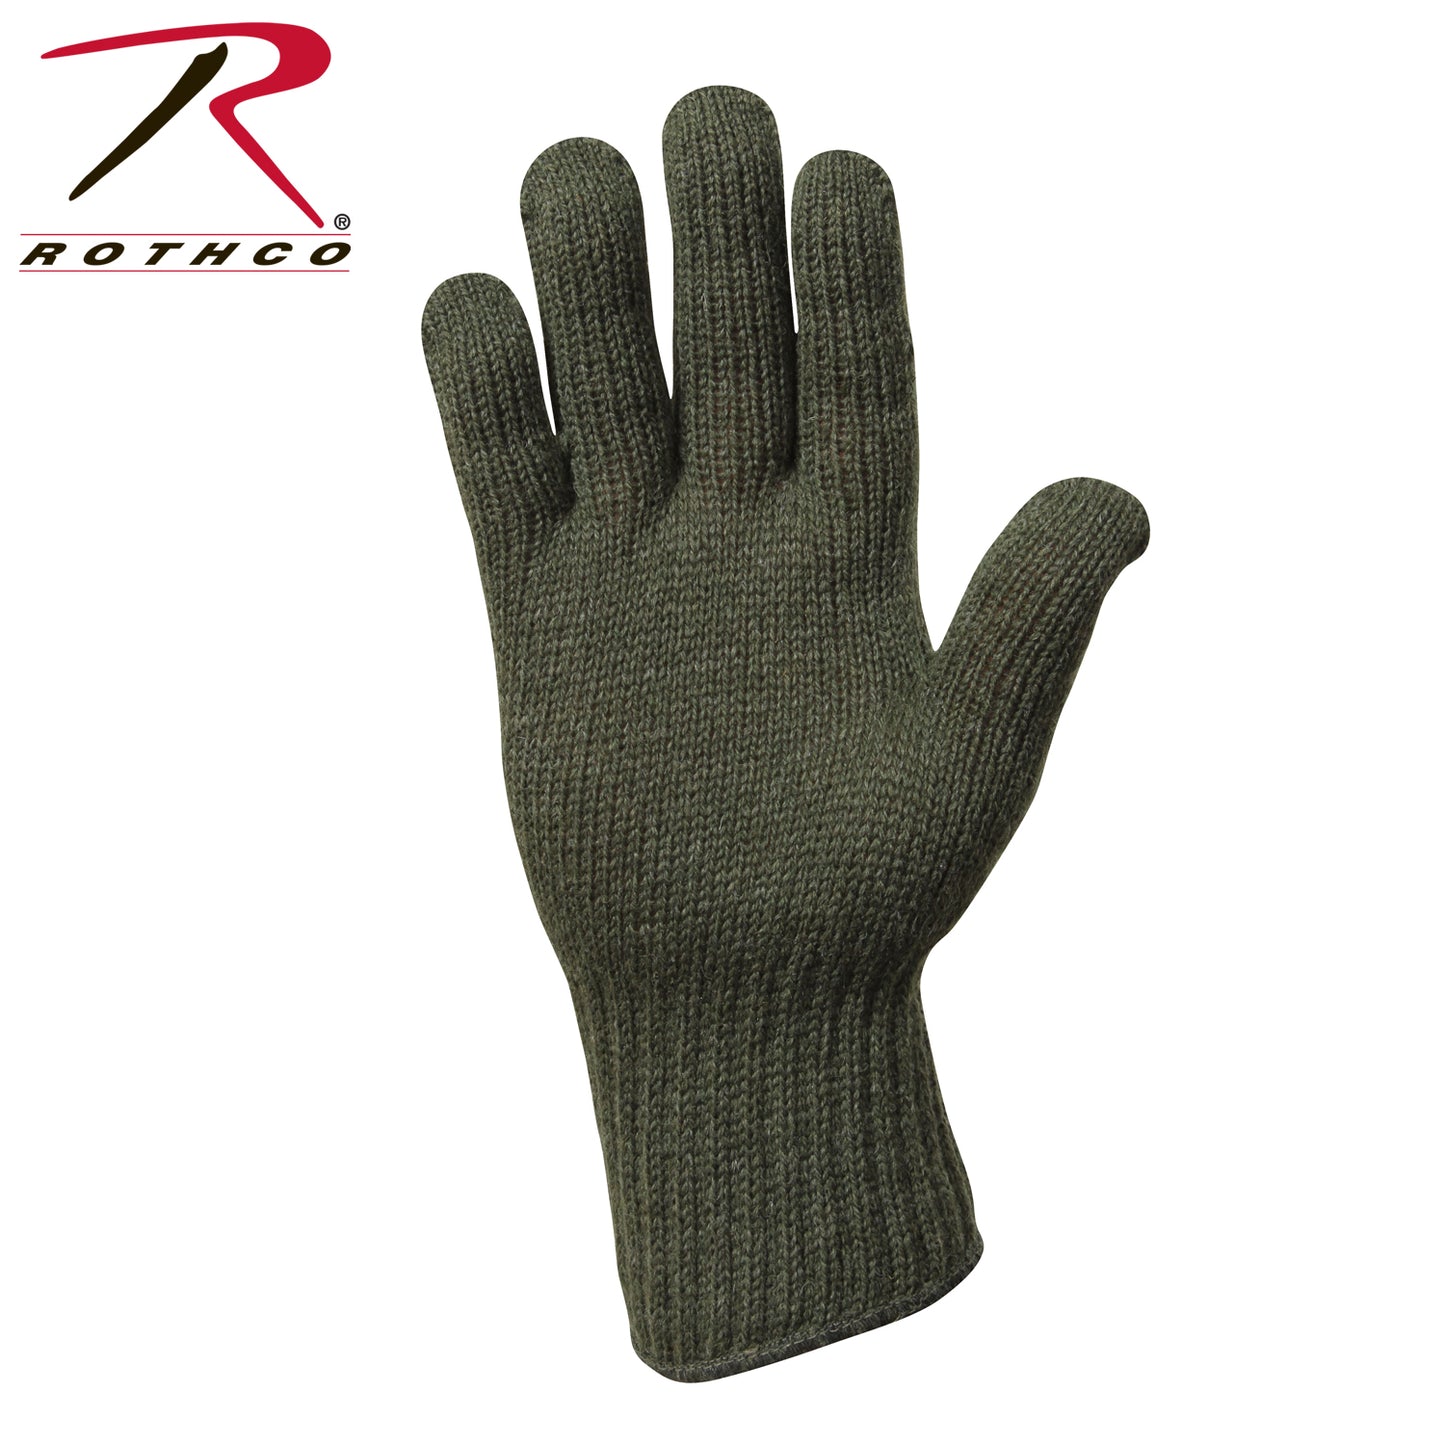 G.I. Wool Glove Liners